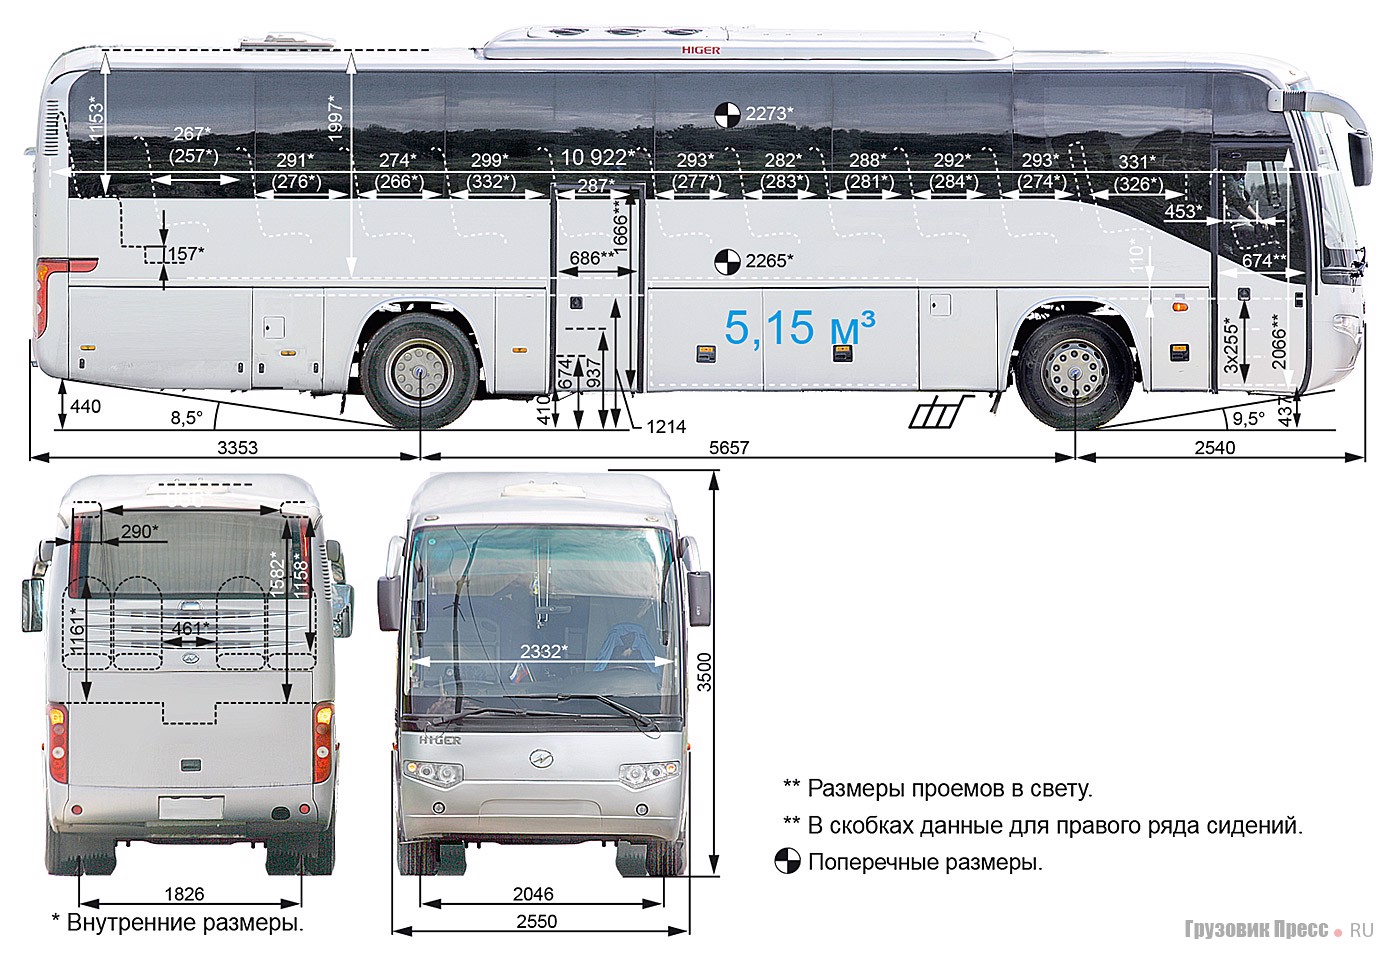 Автобус длиной 15 метров. Higer 6119 габариты. Higer klq6129q технические характеристики. Higer klq6119tq чертеж. Higer klq6129q схема.